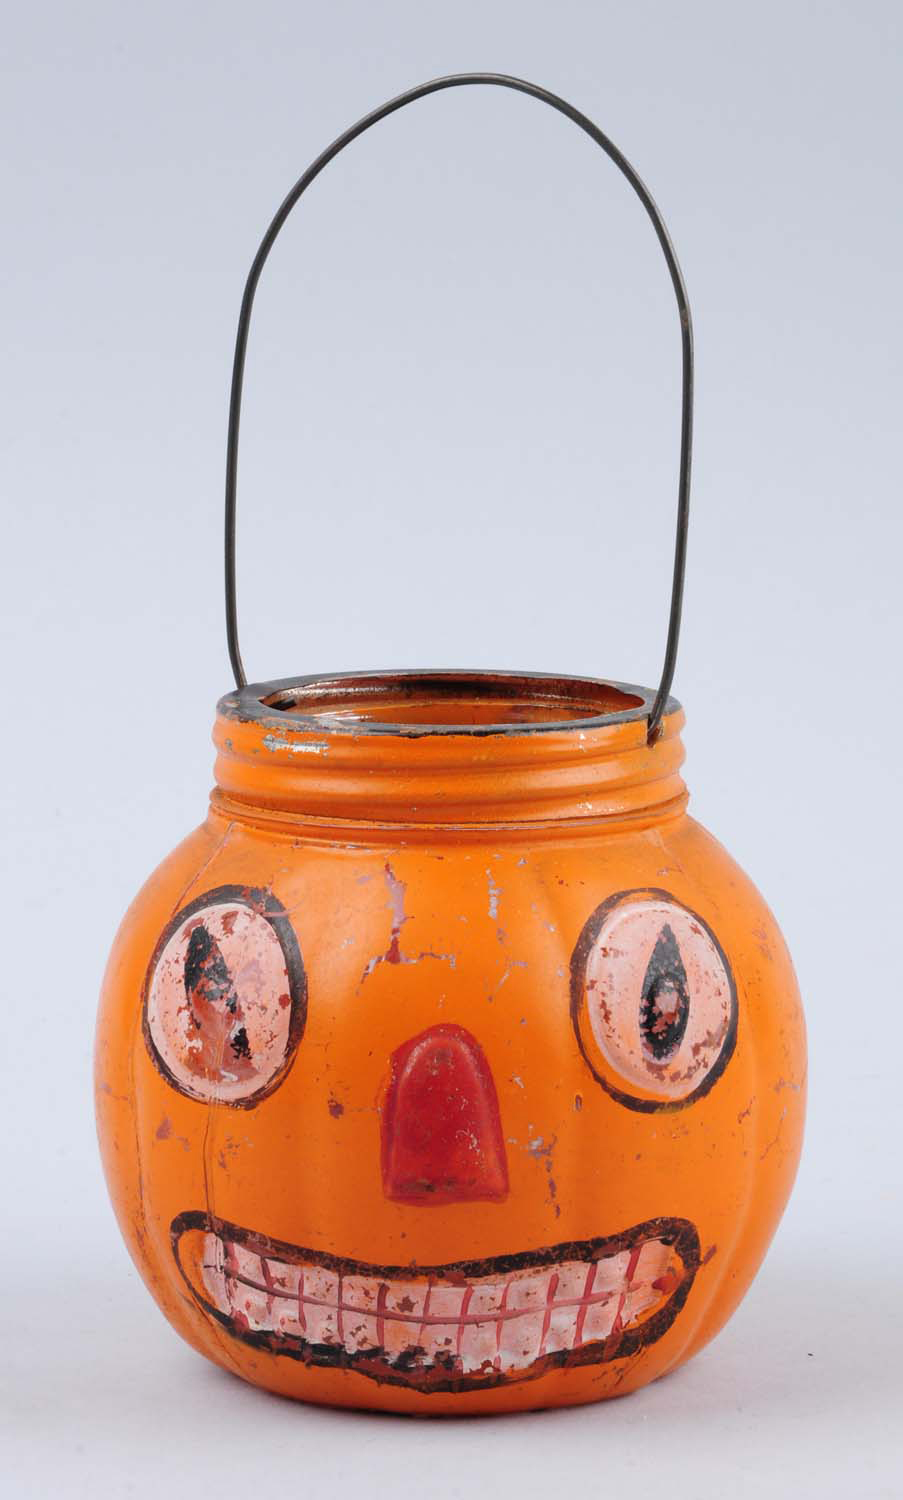 Painted glass pumpkin head Halloween candy basket, est. $100-$200. Morphy Auctions image